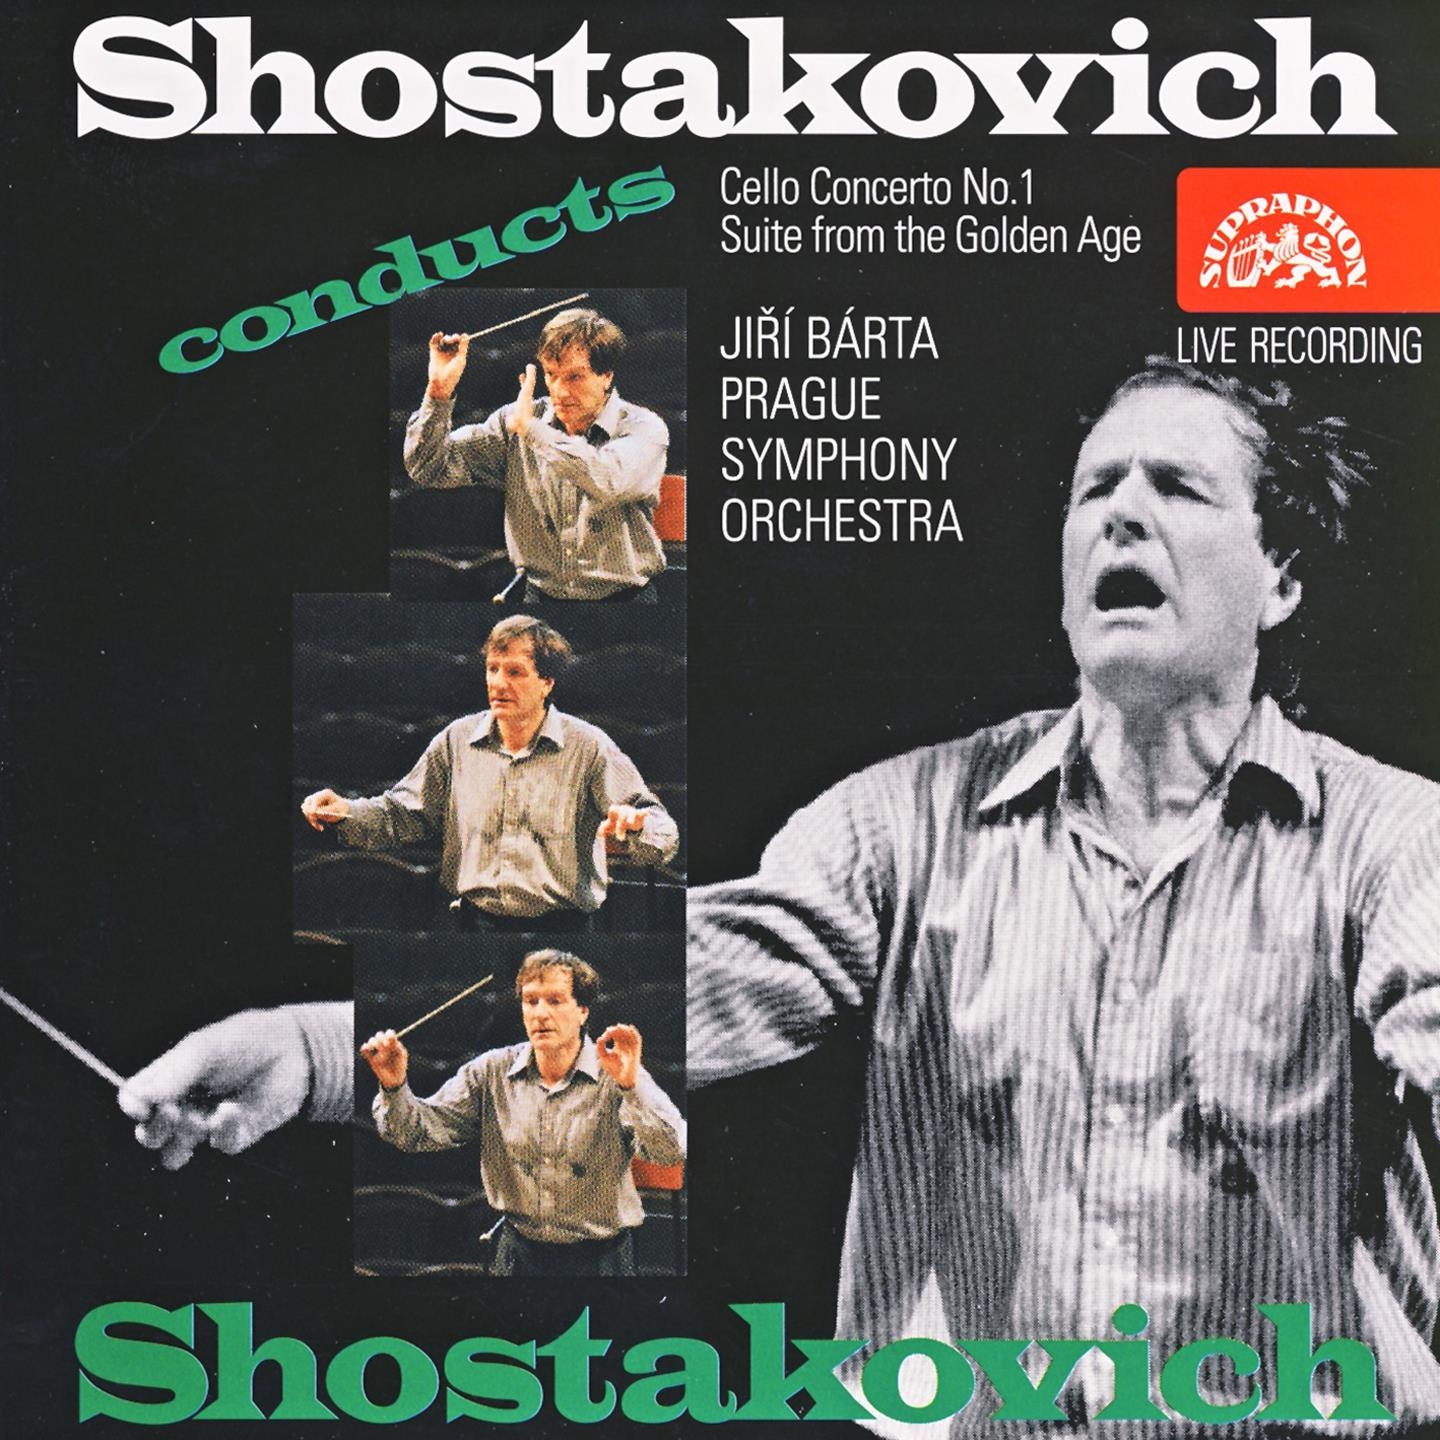 Shostakovich: Cello Concerto No. 1, Suite from the Golden Age